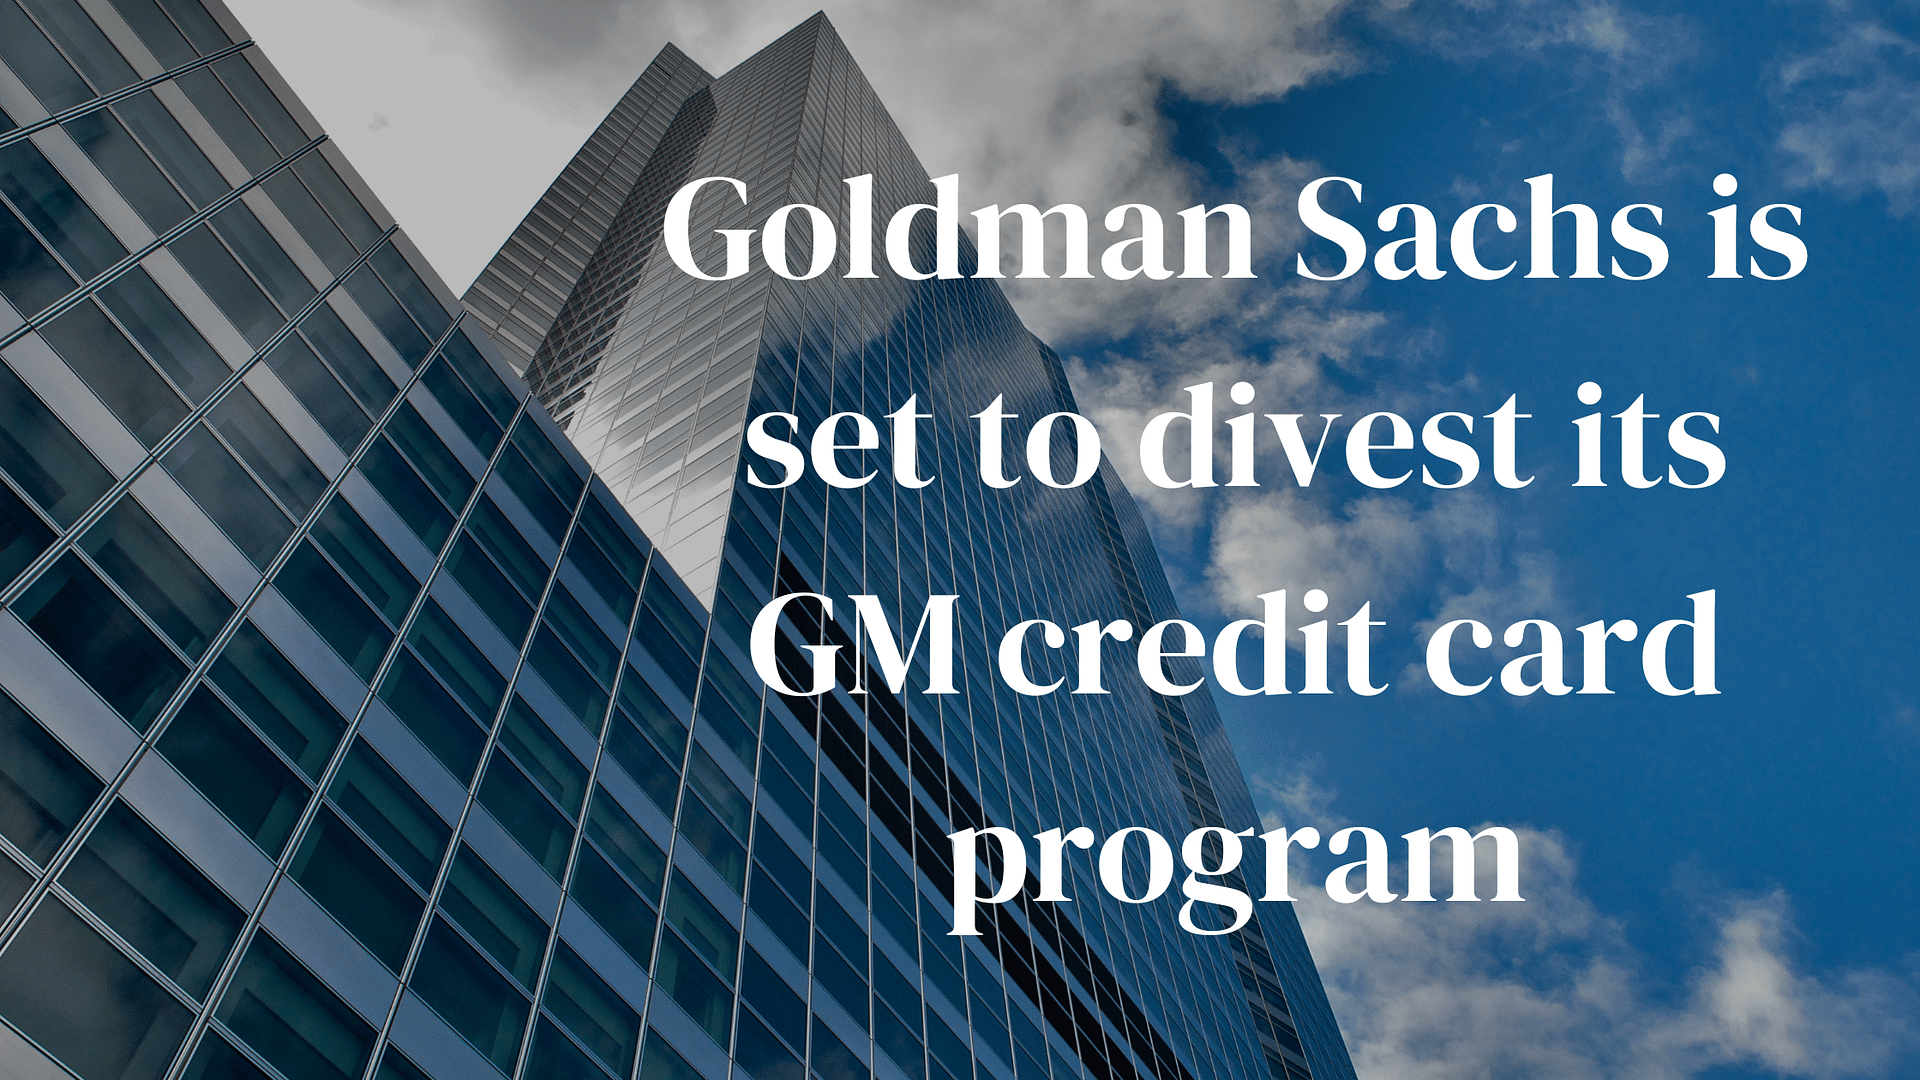 Goldman Sachs is set to divest its GM credit card program